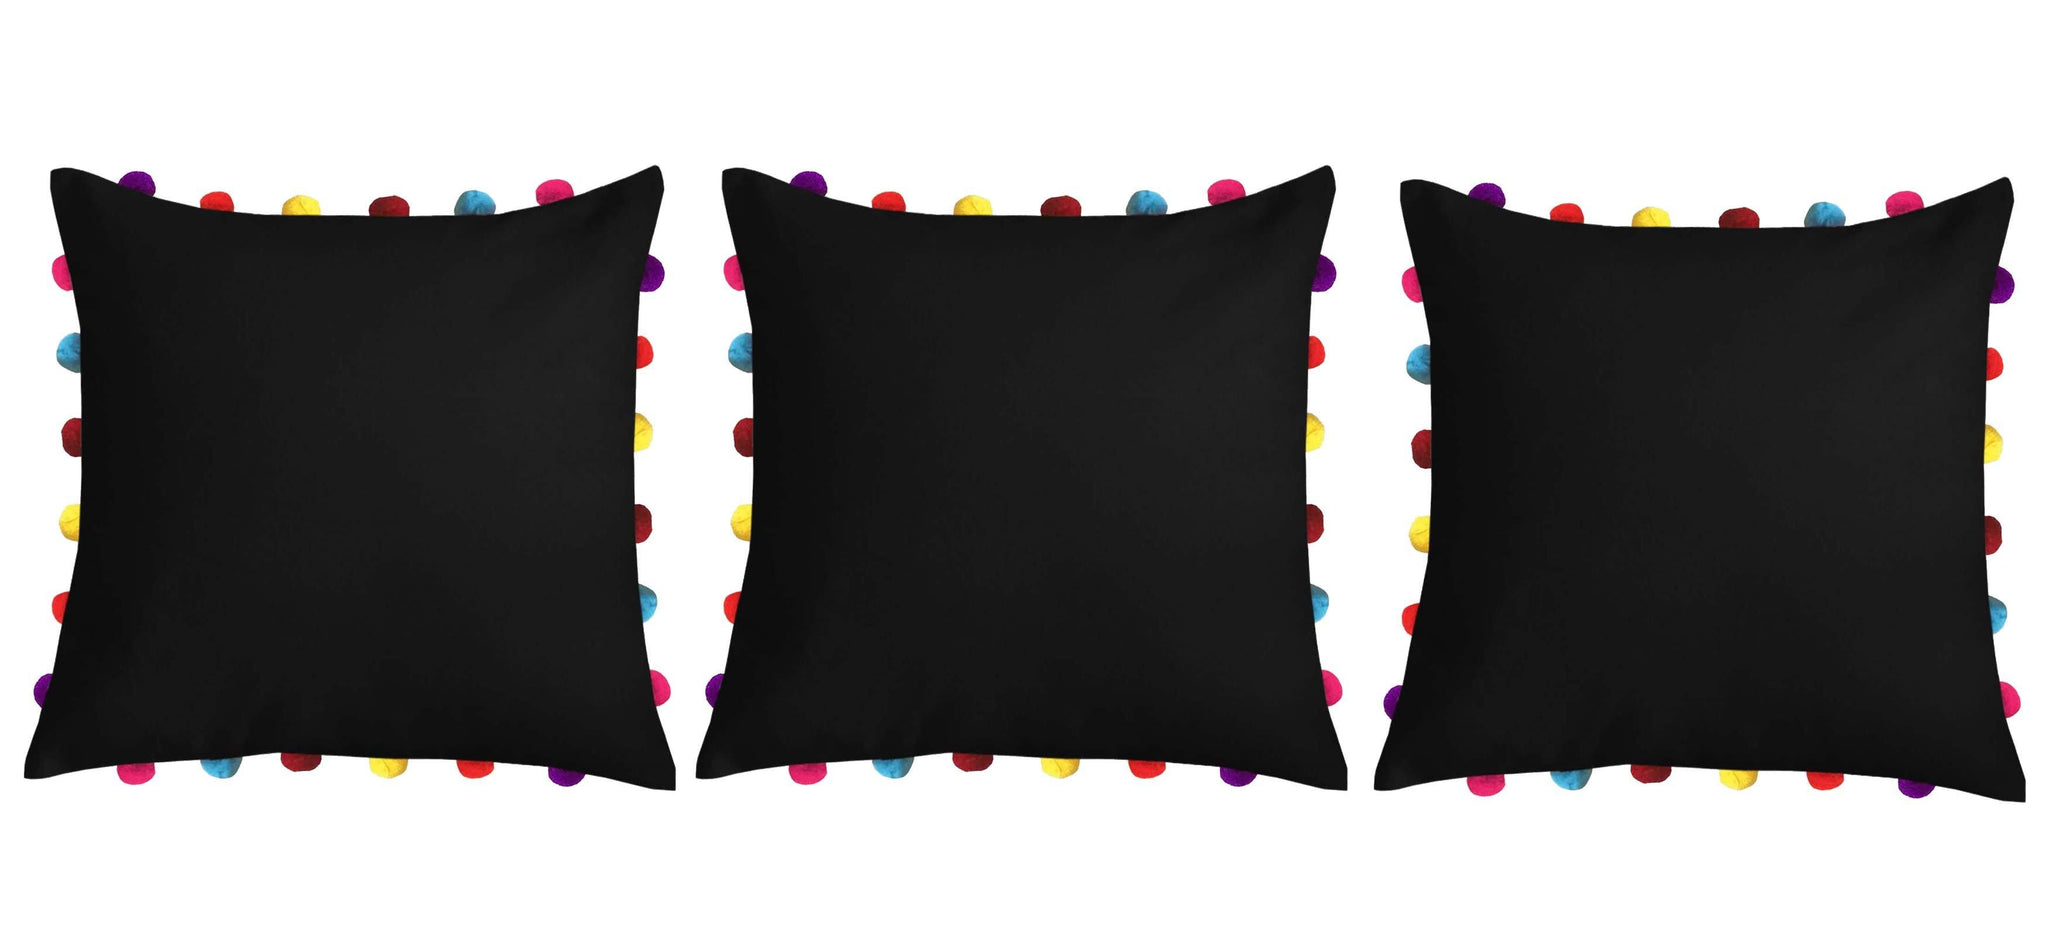 Lushomes Pirate Black Cushion Cover with Colorful Pom pom (3 pcs, 18 x 18”) - Lushomes